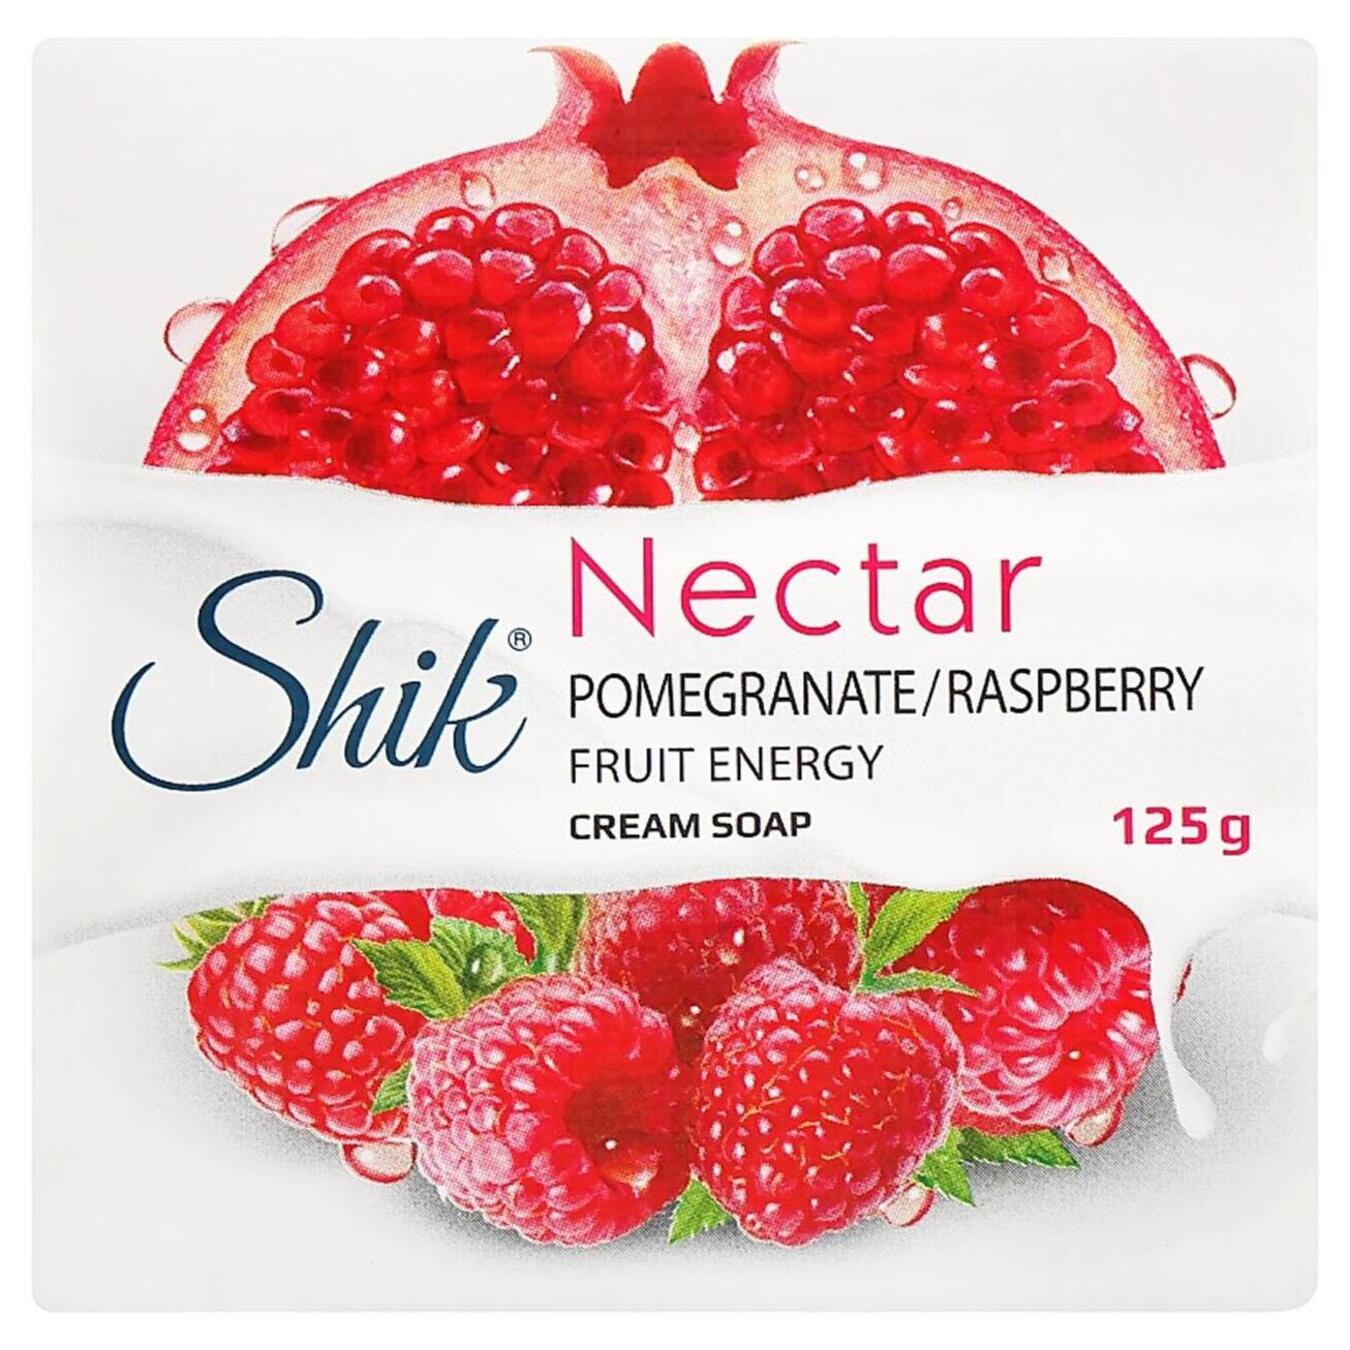 Cream-soap Shik nectar pomegranate and raspberry 125g